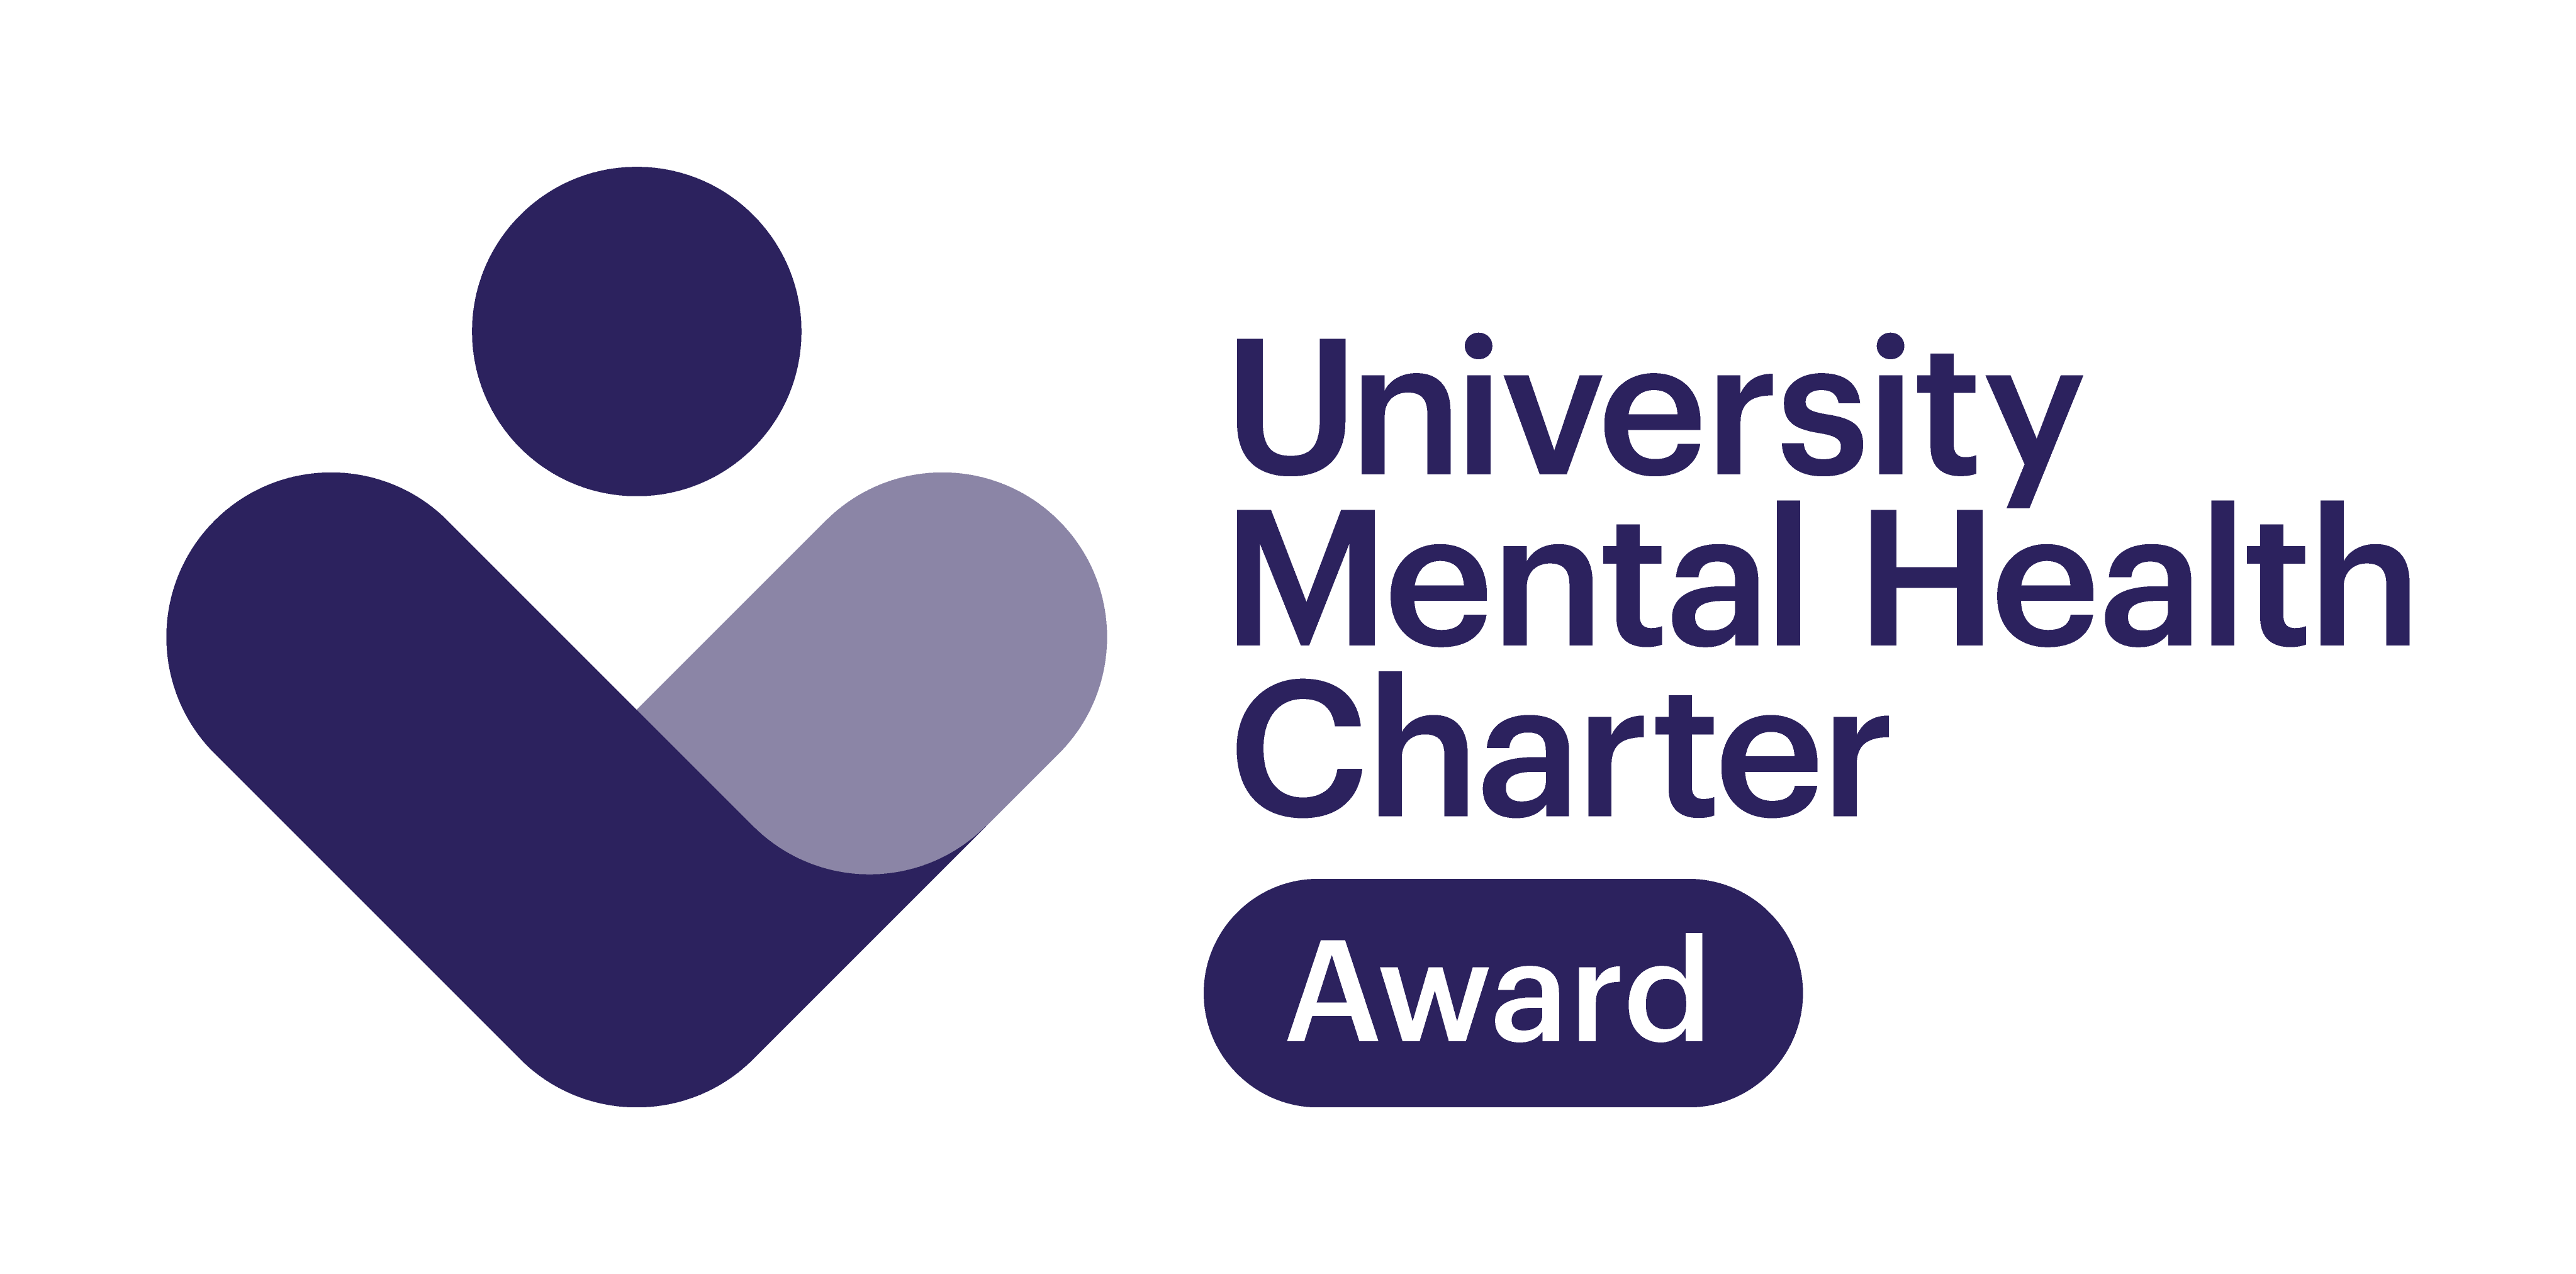 University Mental Health Charter Award